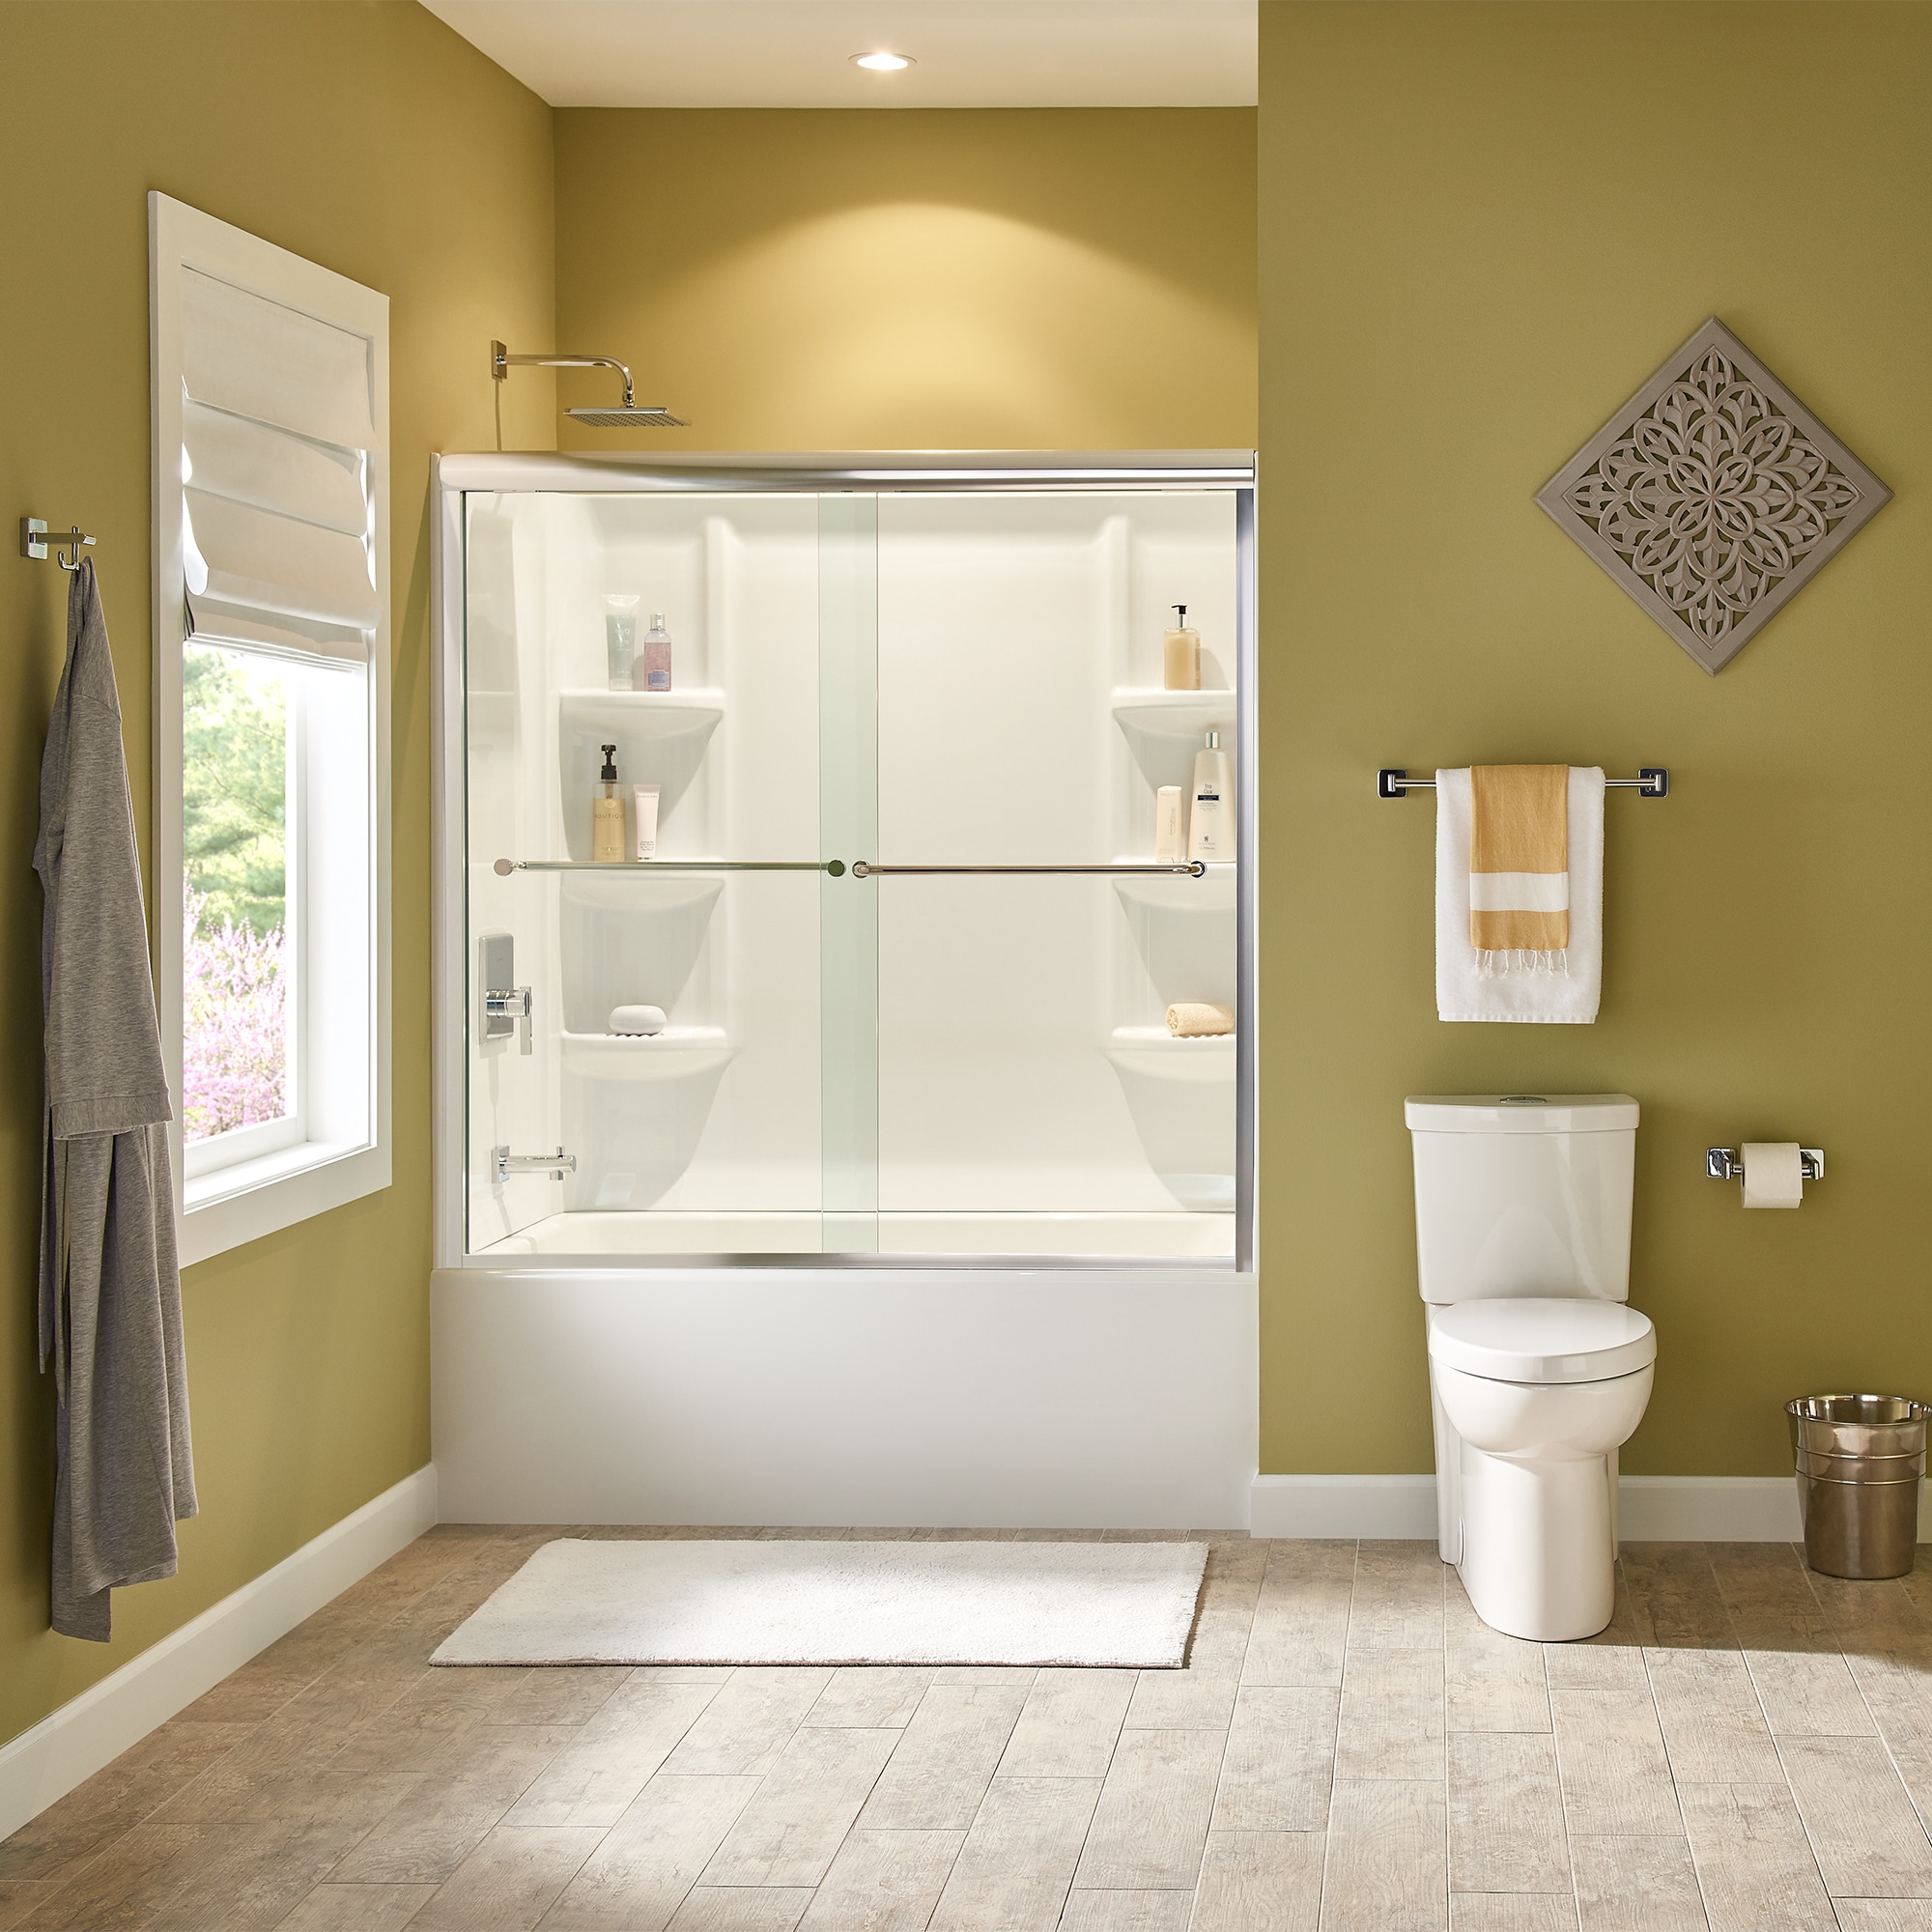 How to Organize The Bathroom Counter & Tub Surround - Polished Habitat